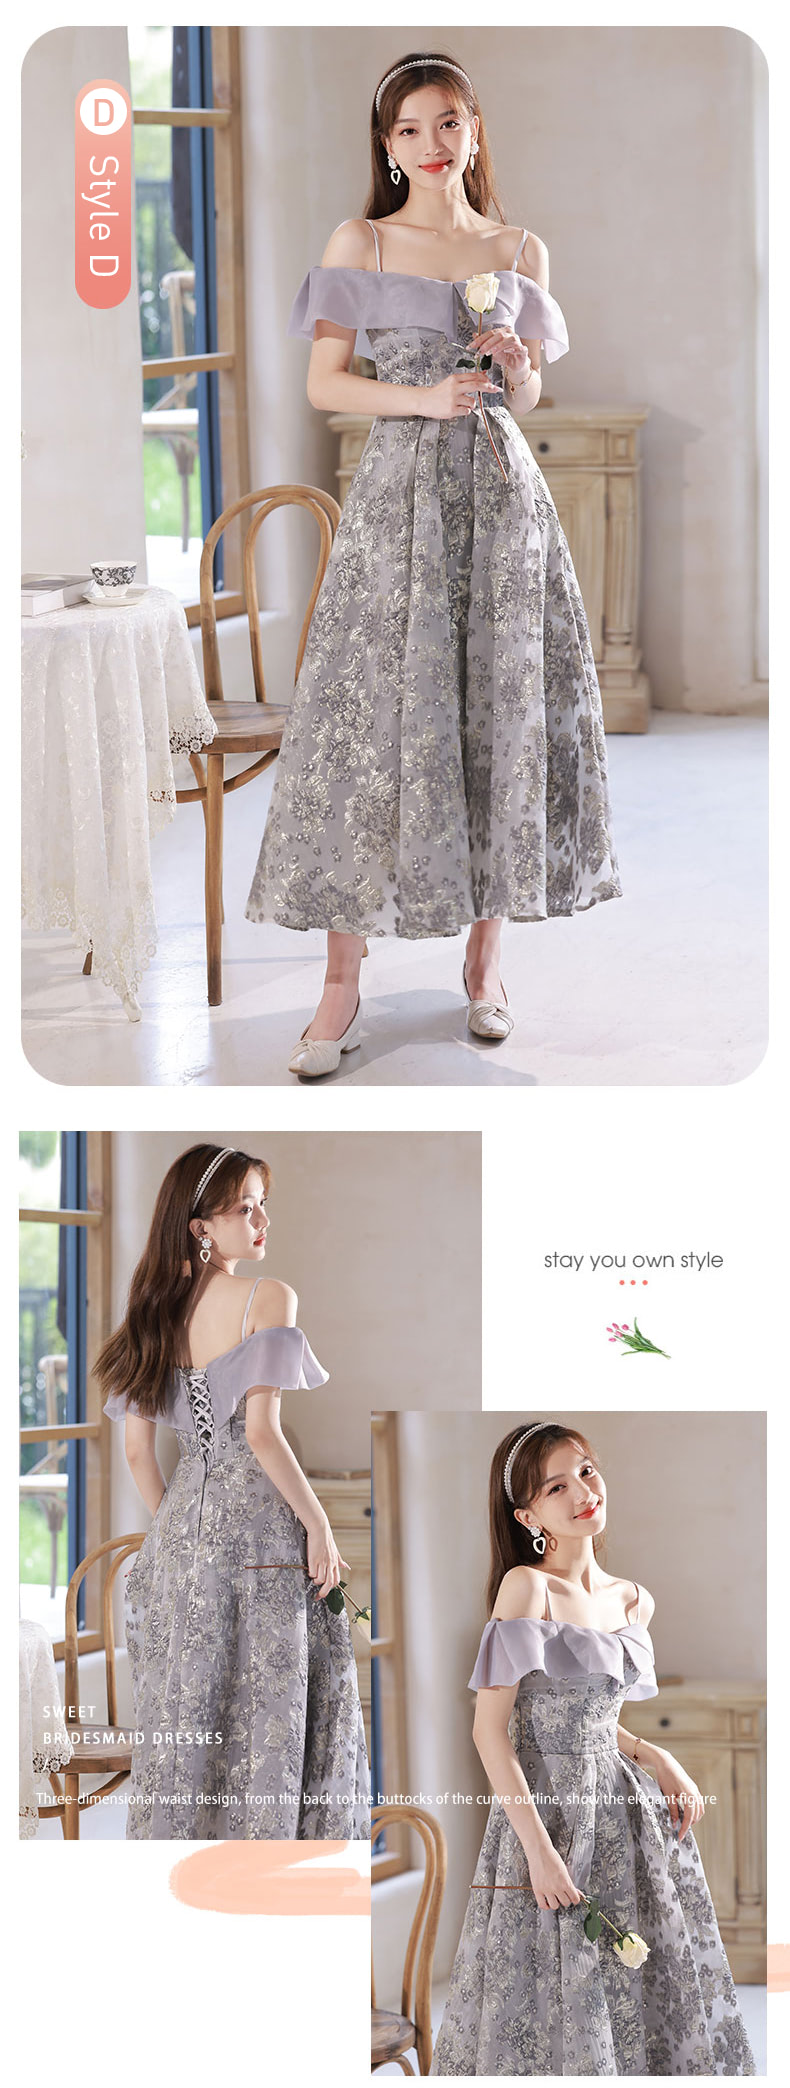 A-Line-Elegant-Floor-Length-Bridesmaid-Maxi-Evening-Dress22.jpg